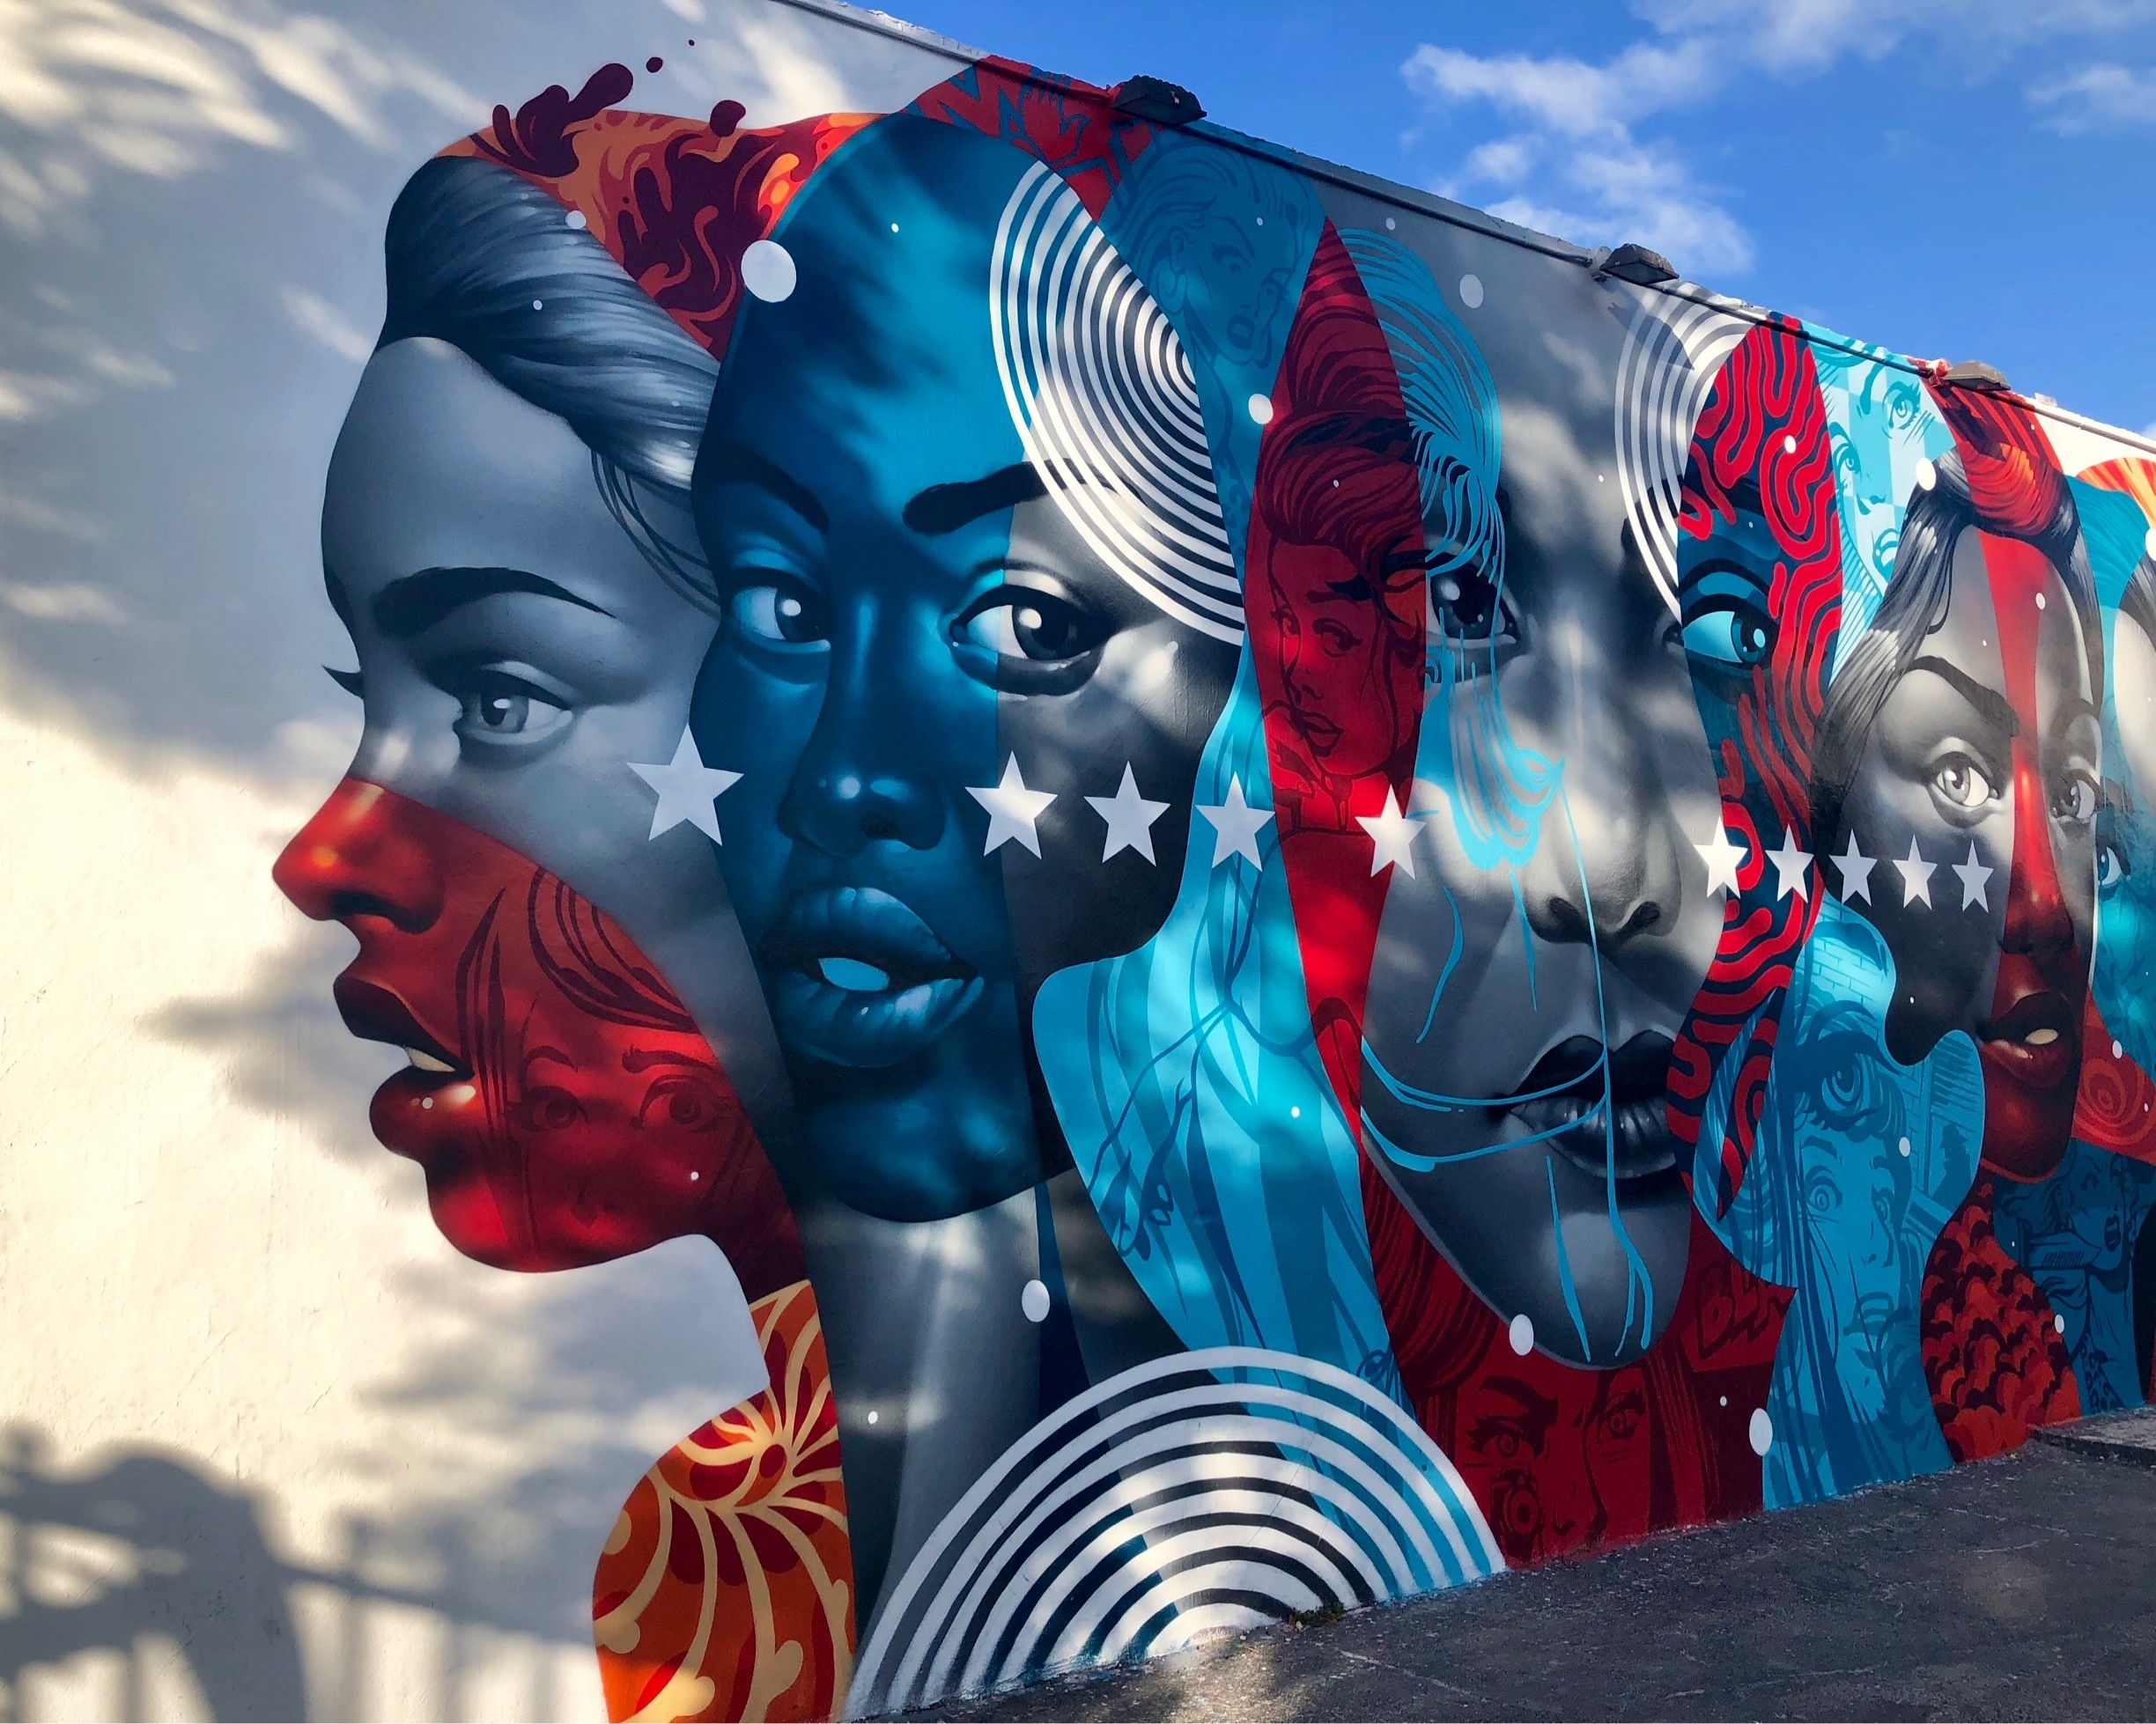 Art Basel Miami Beach: Spectacular murals in Wynwood